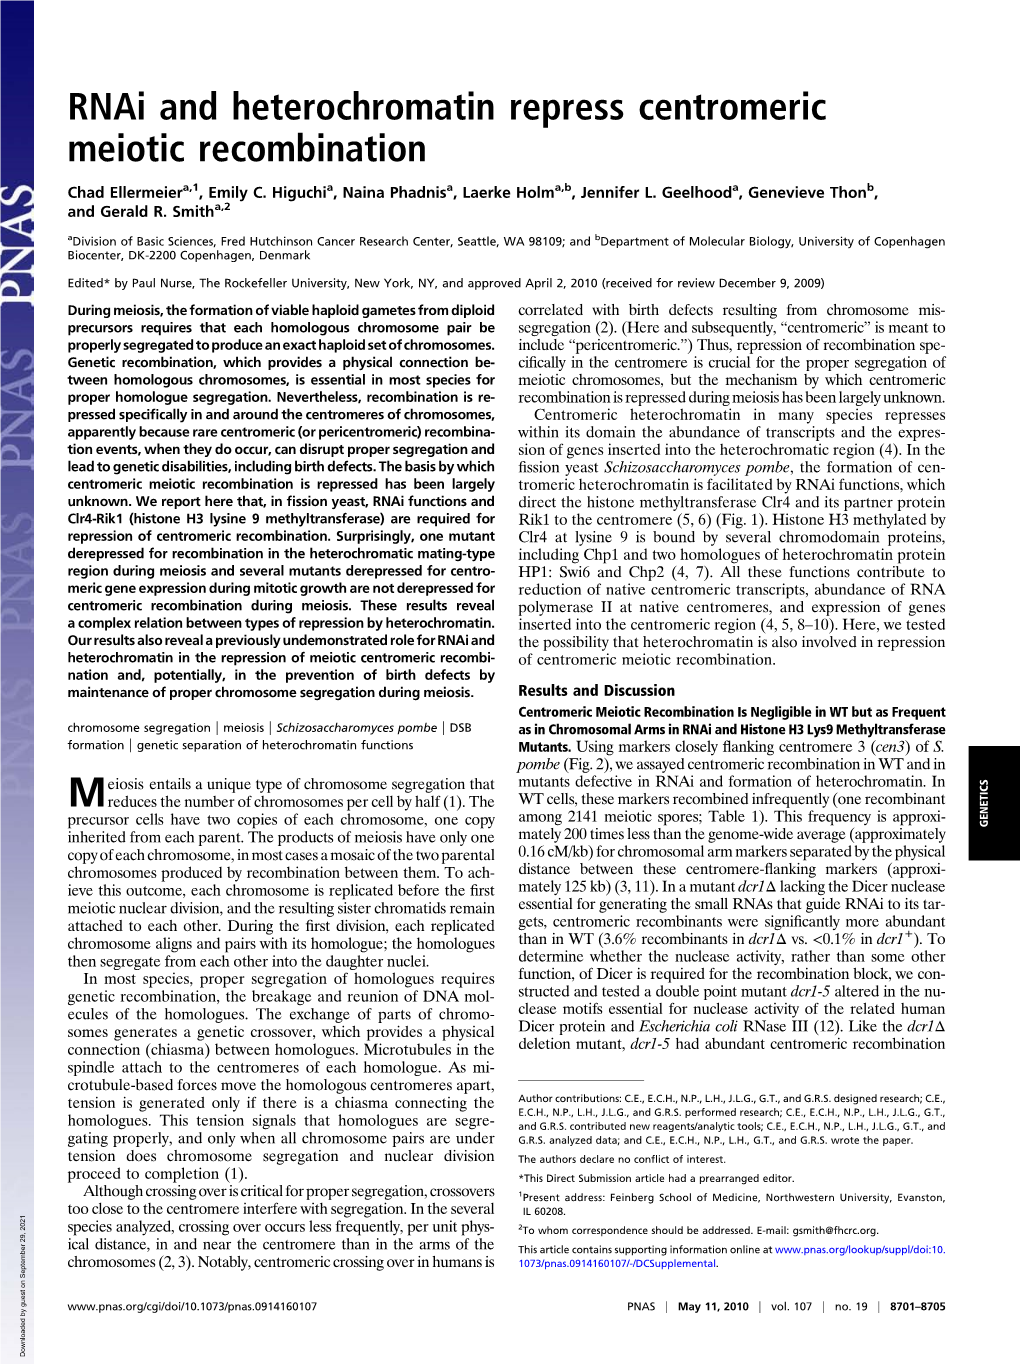 Rnai and Heterochromatin Repress Centromeric Meiotic Recombination